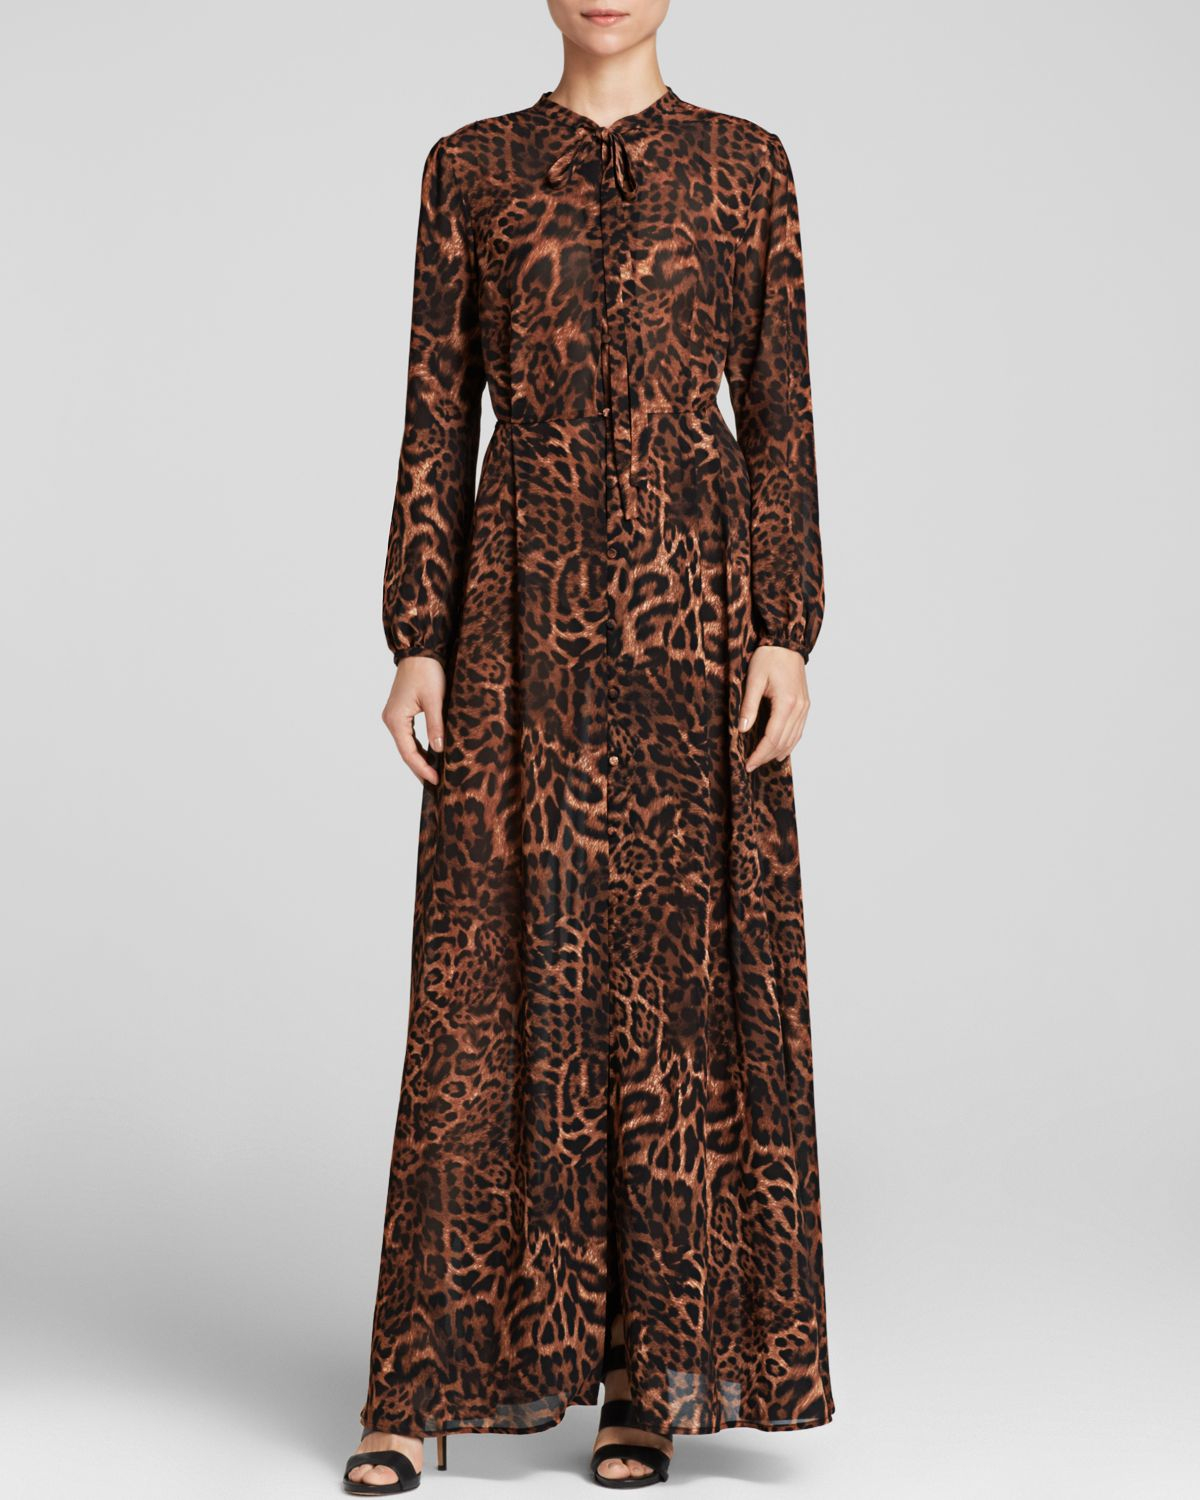 MICHAEL Michael Kors Fremont Leopard Print Maxi Dress in Brown - Lyst